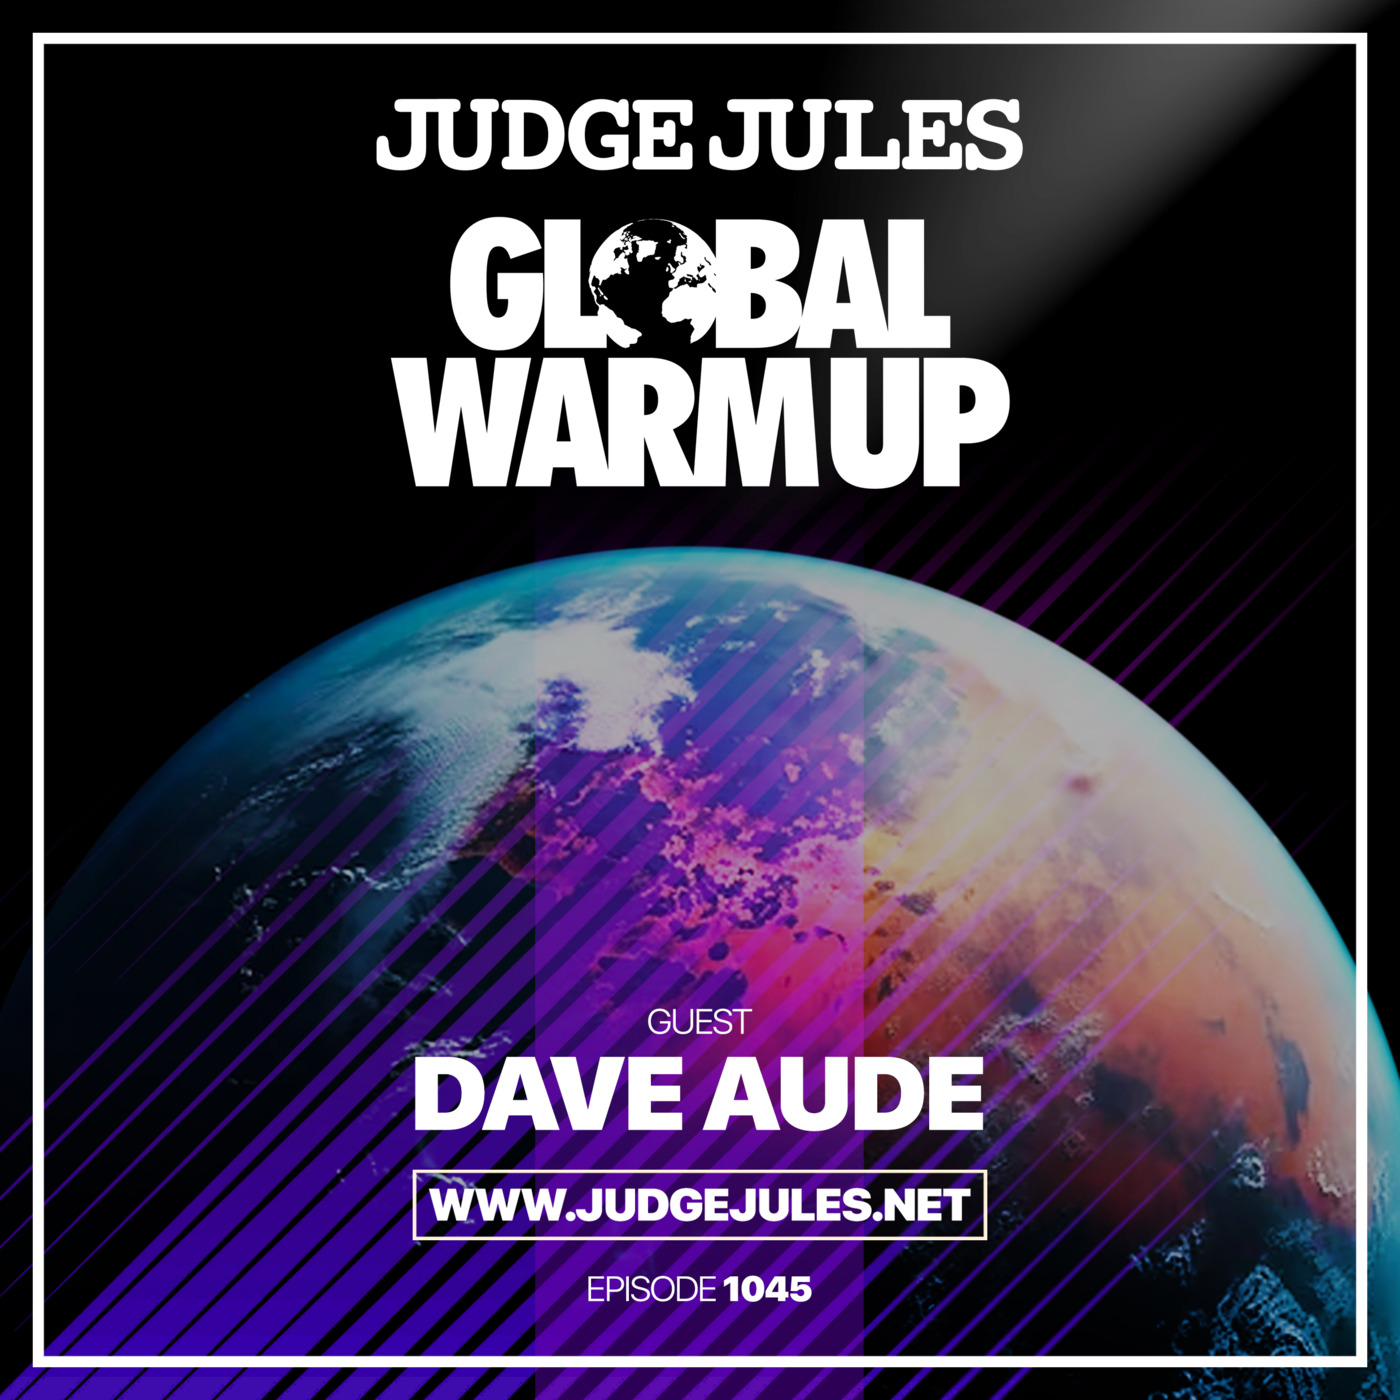 Episode 1045: JUDGE JULES PRESENTS THE GLOBAL WARM UP EPISODE 1045